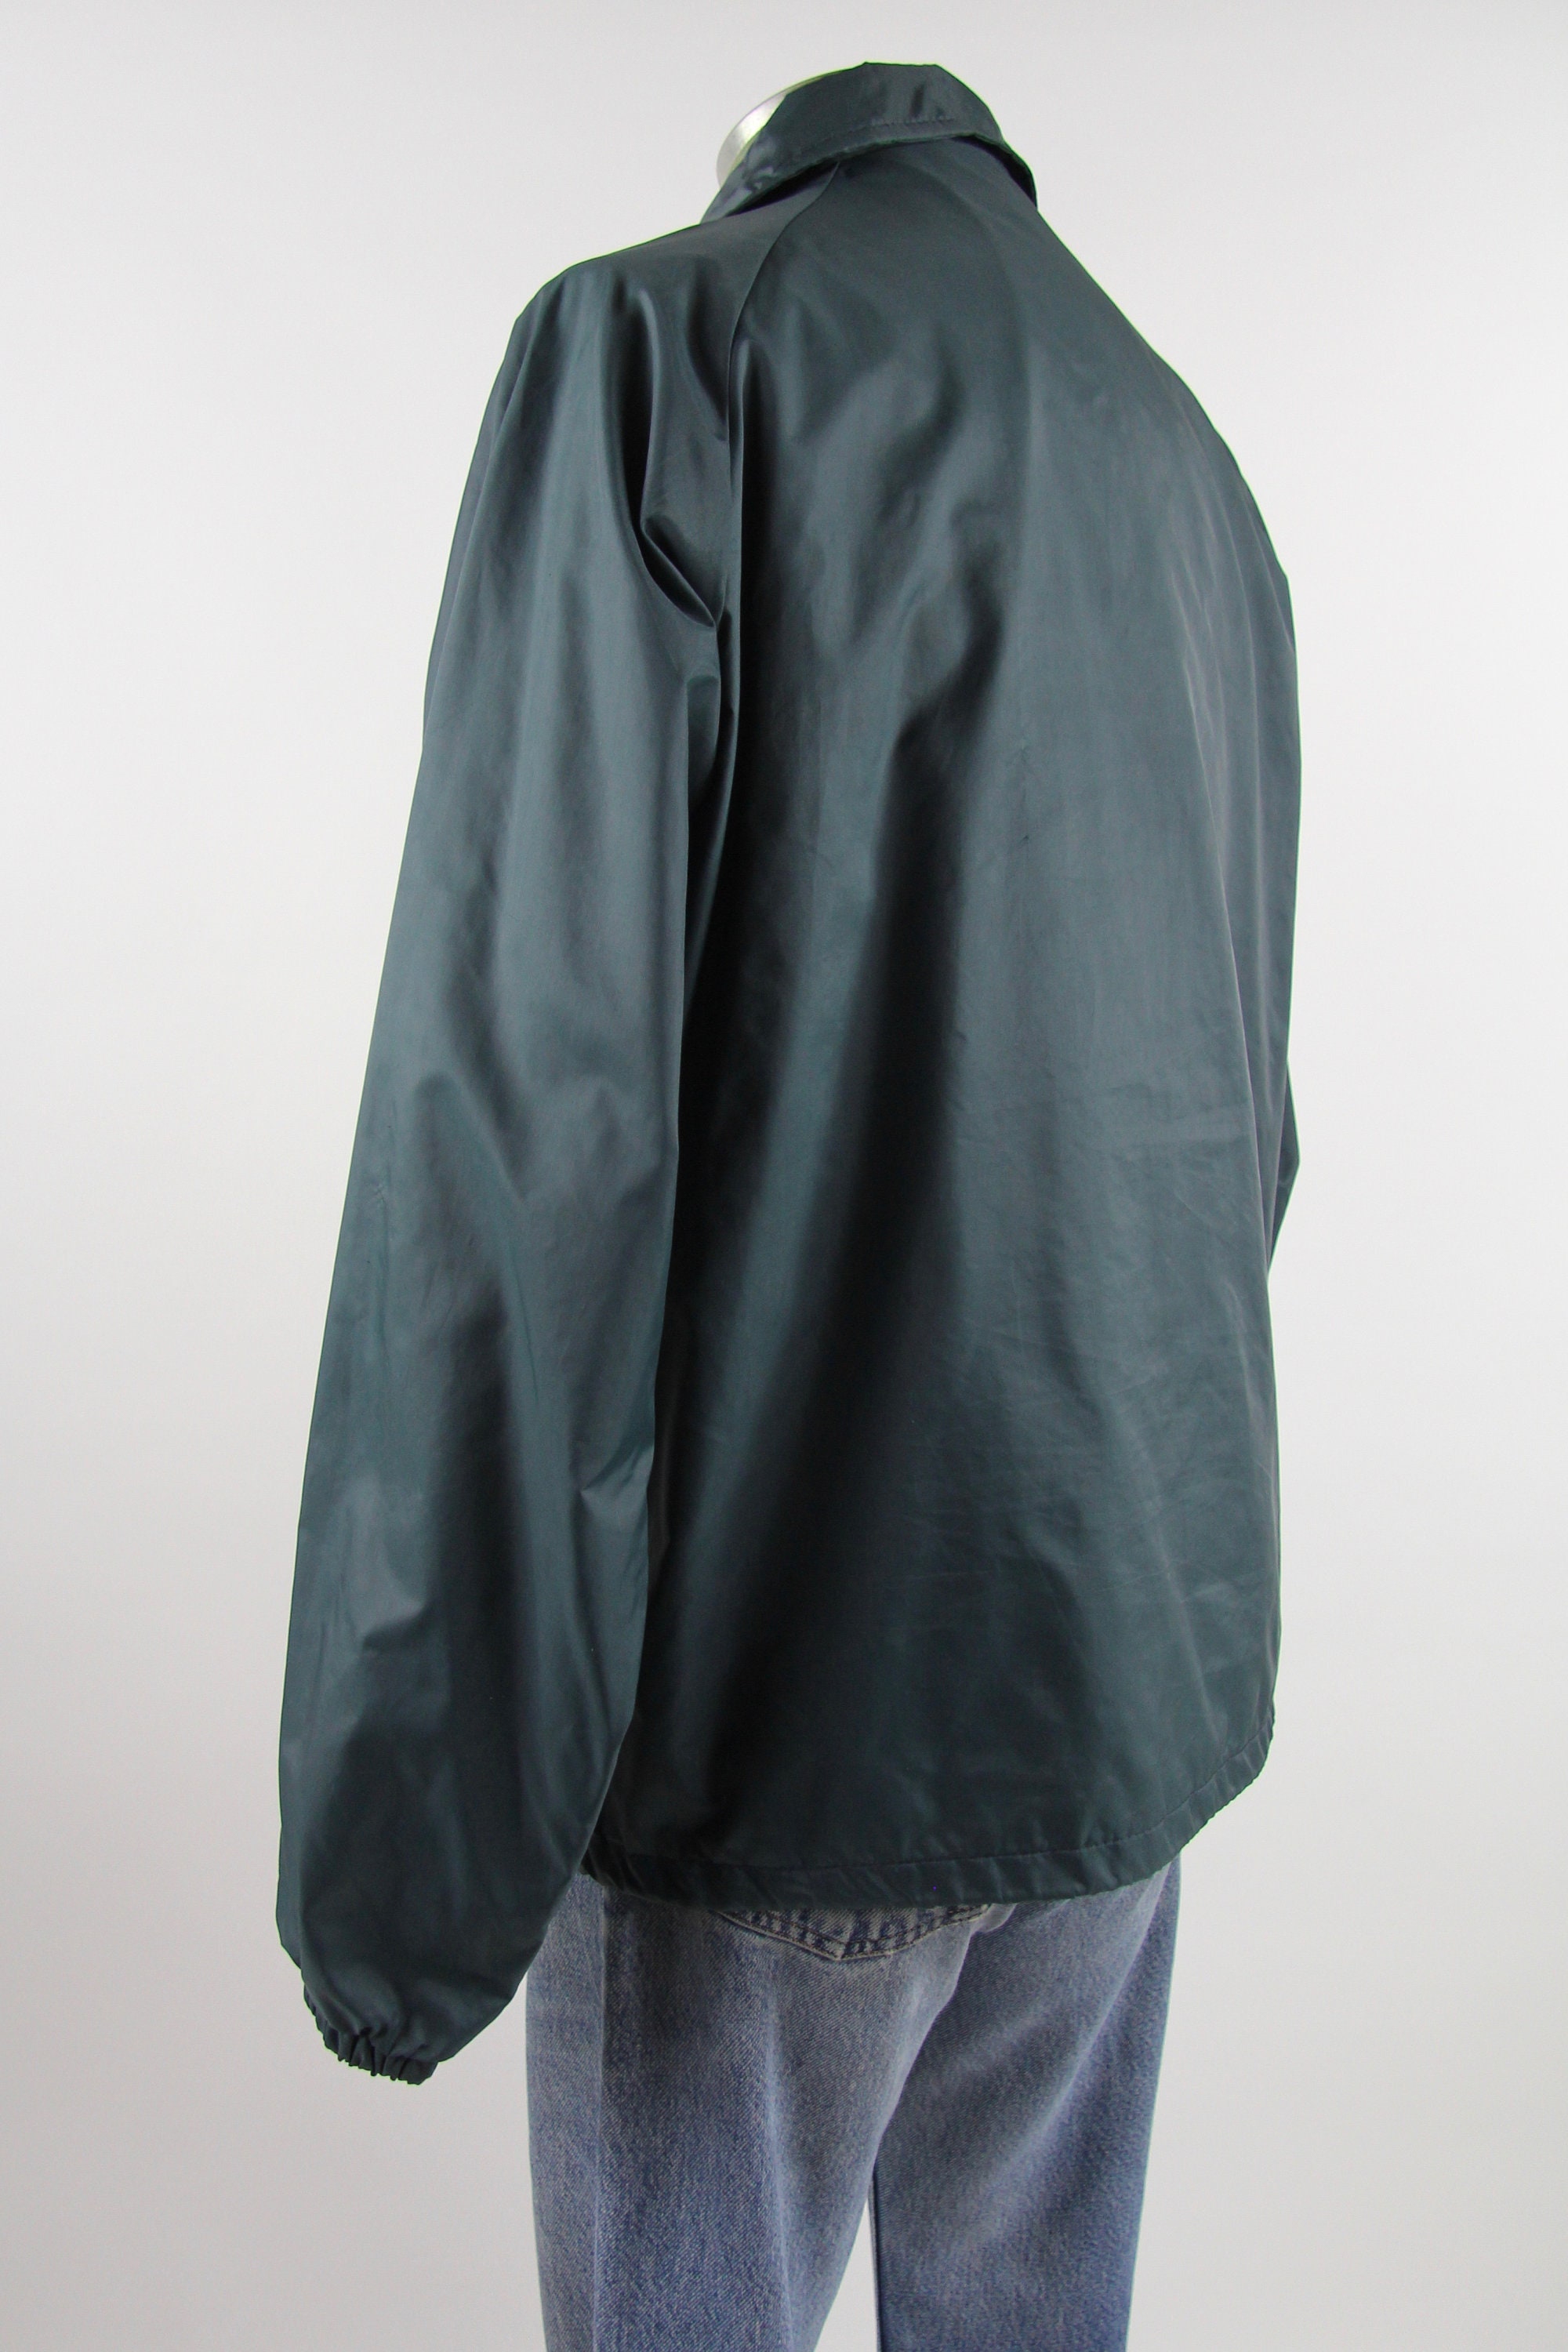 70's Track Jacket Men's Coaches Jacket Windbreaker Vintage Size Medium